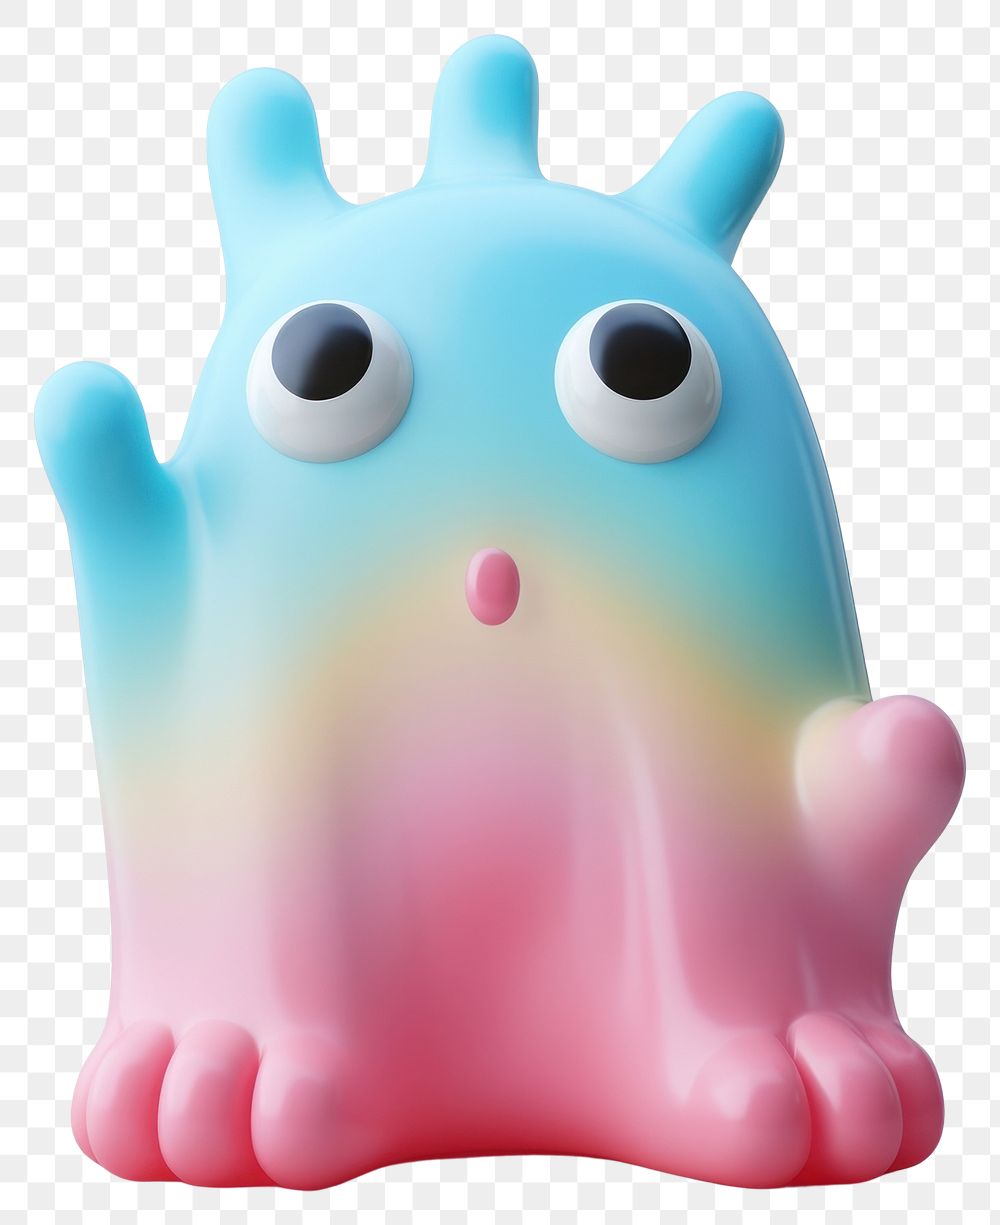 PNG  Light pastel abstract shape monster character cartoon representation creativity.